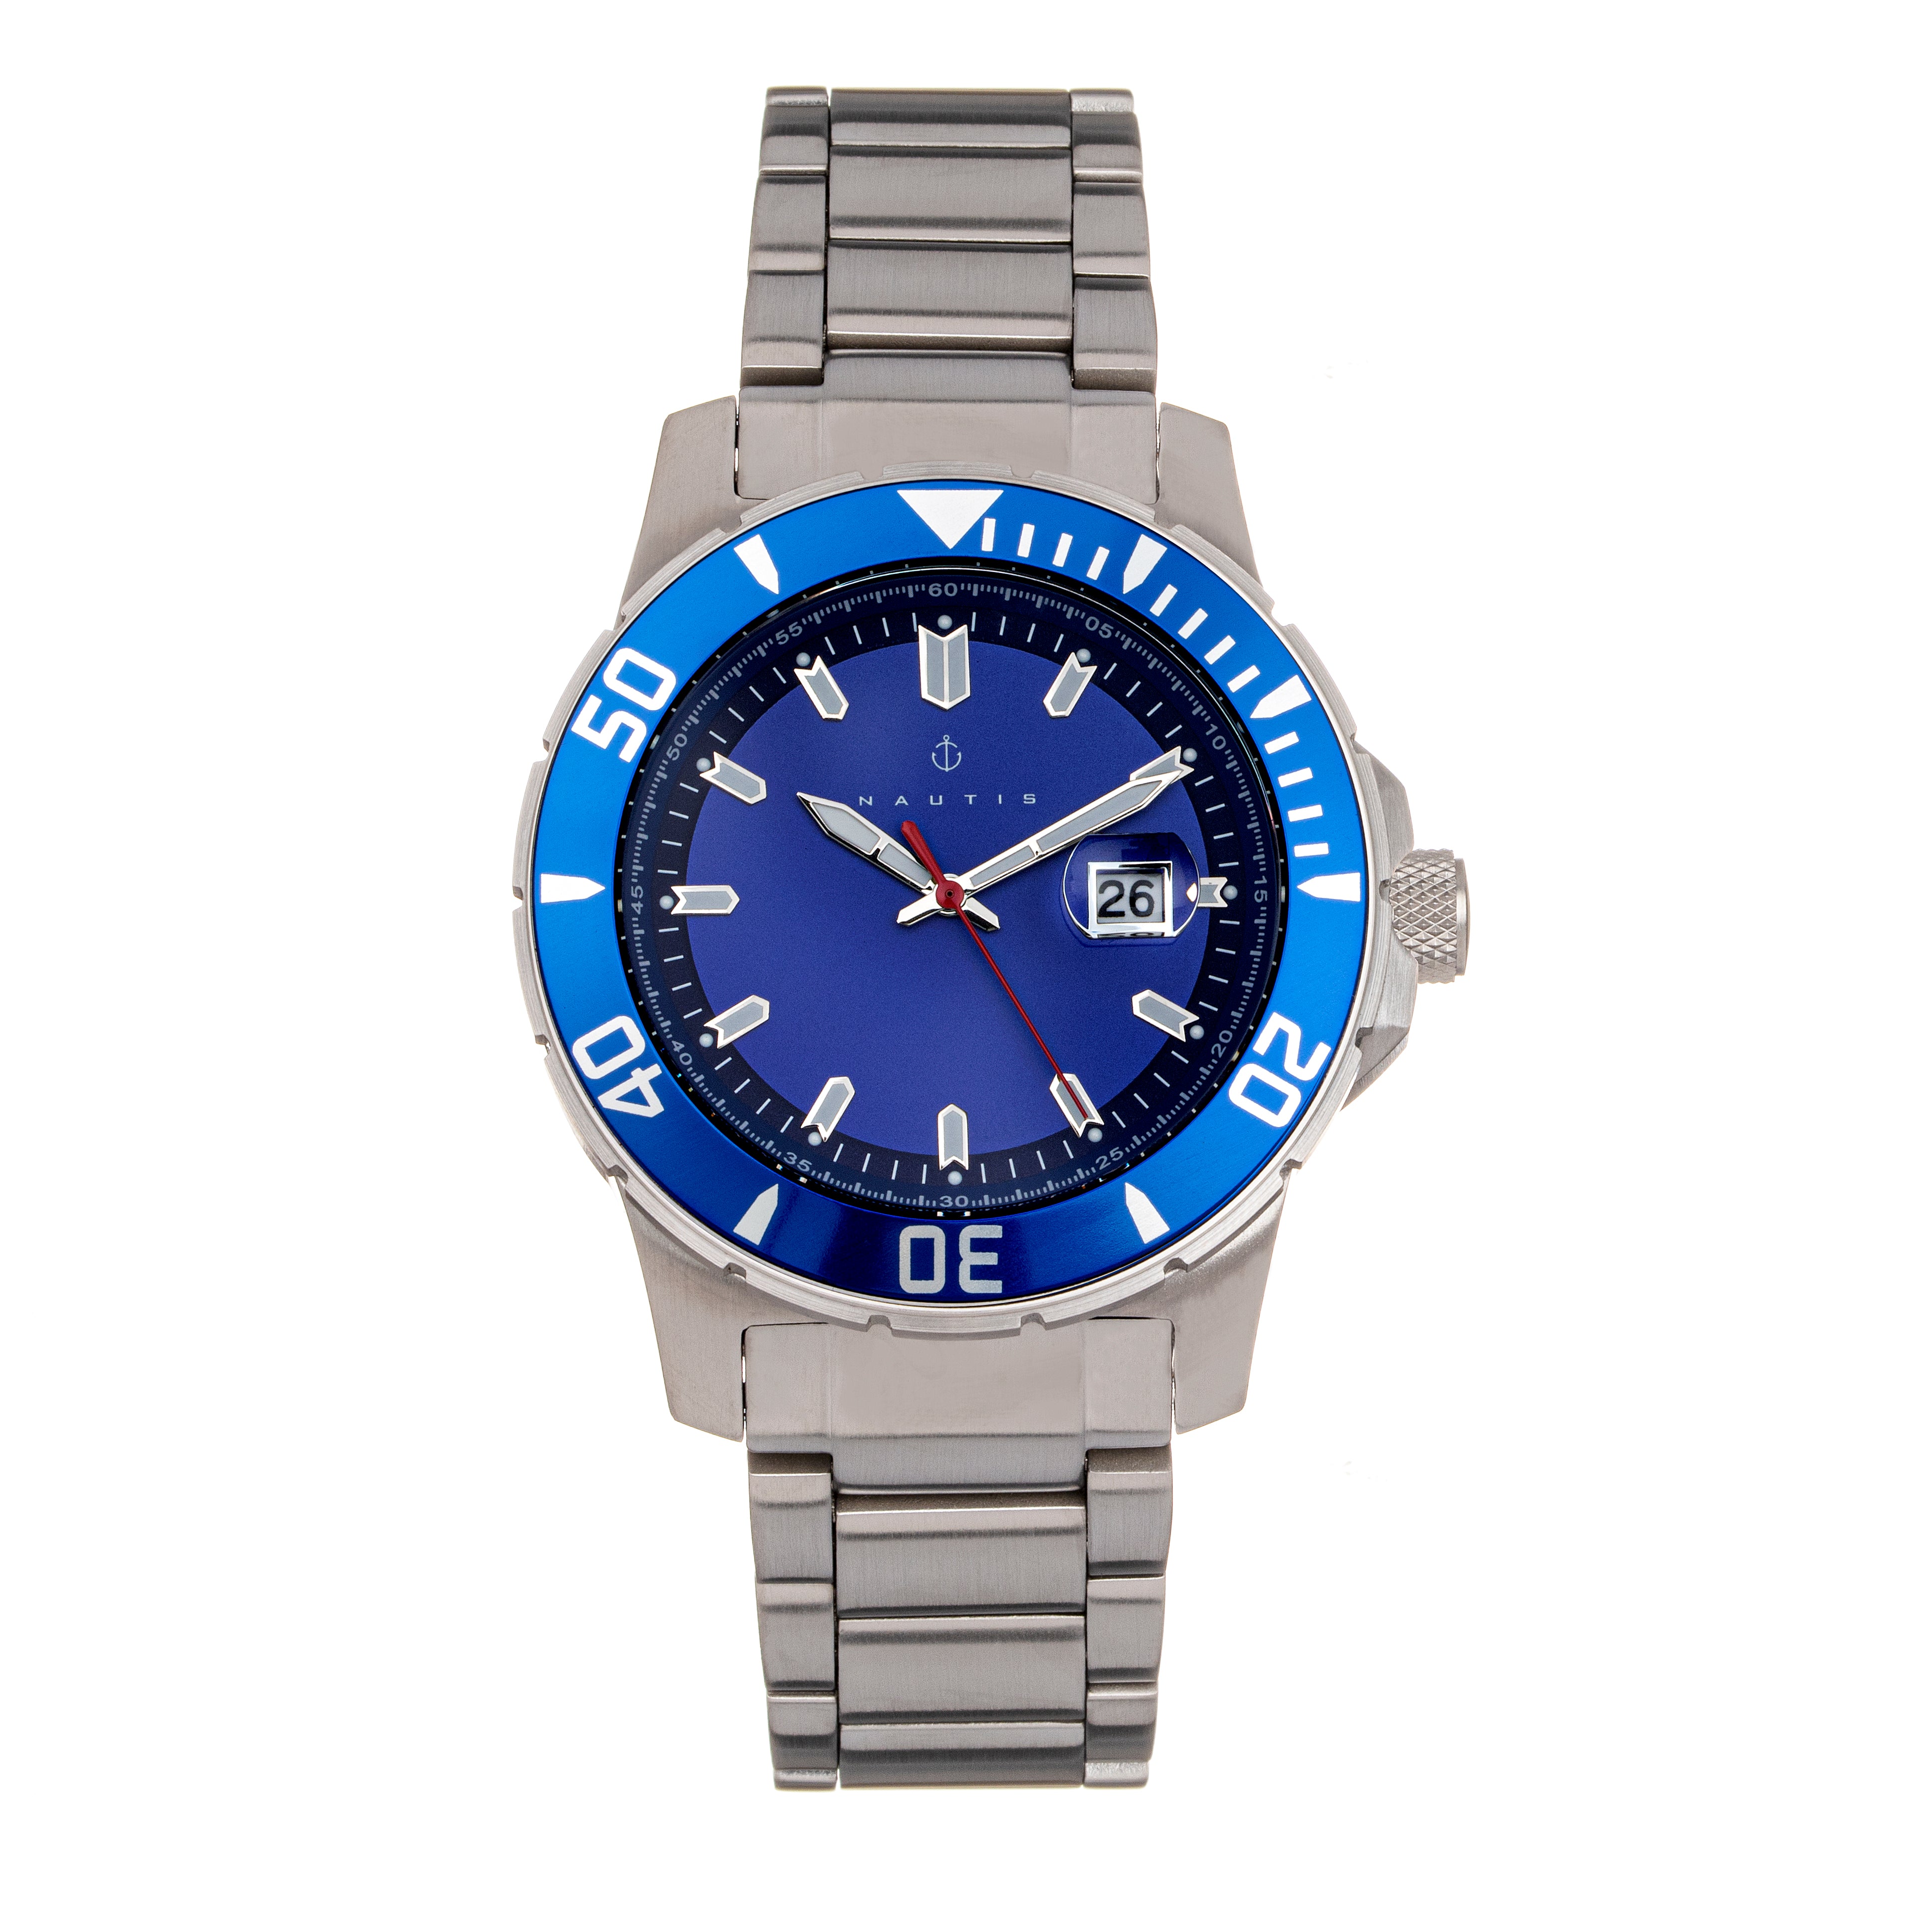 Nautis Admiralty Pro 200 Bracelet Watch w/Date - Blue  - GL2008-E